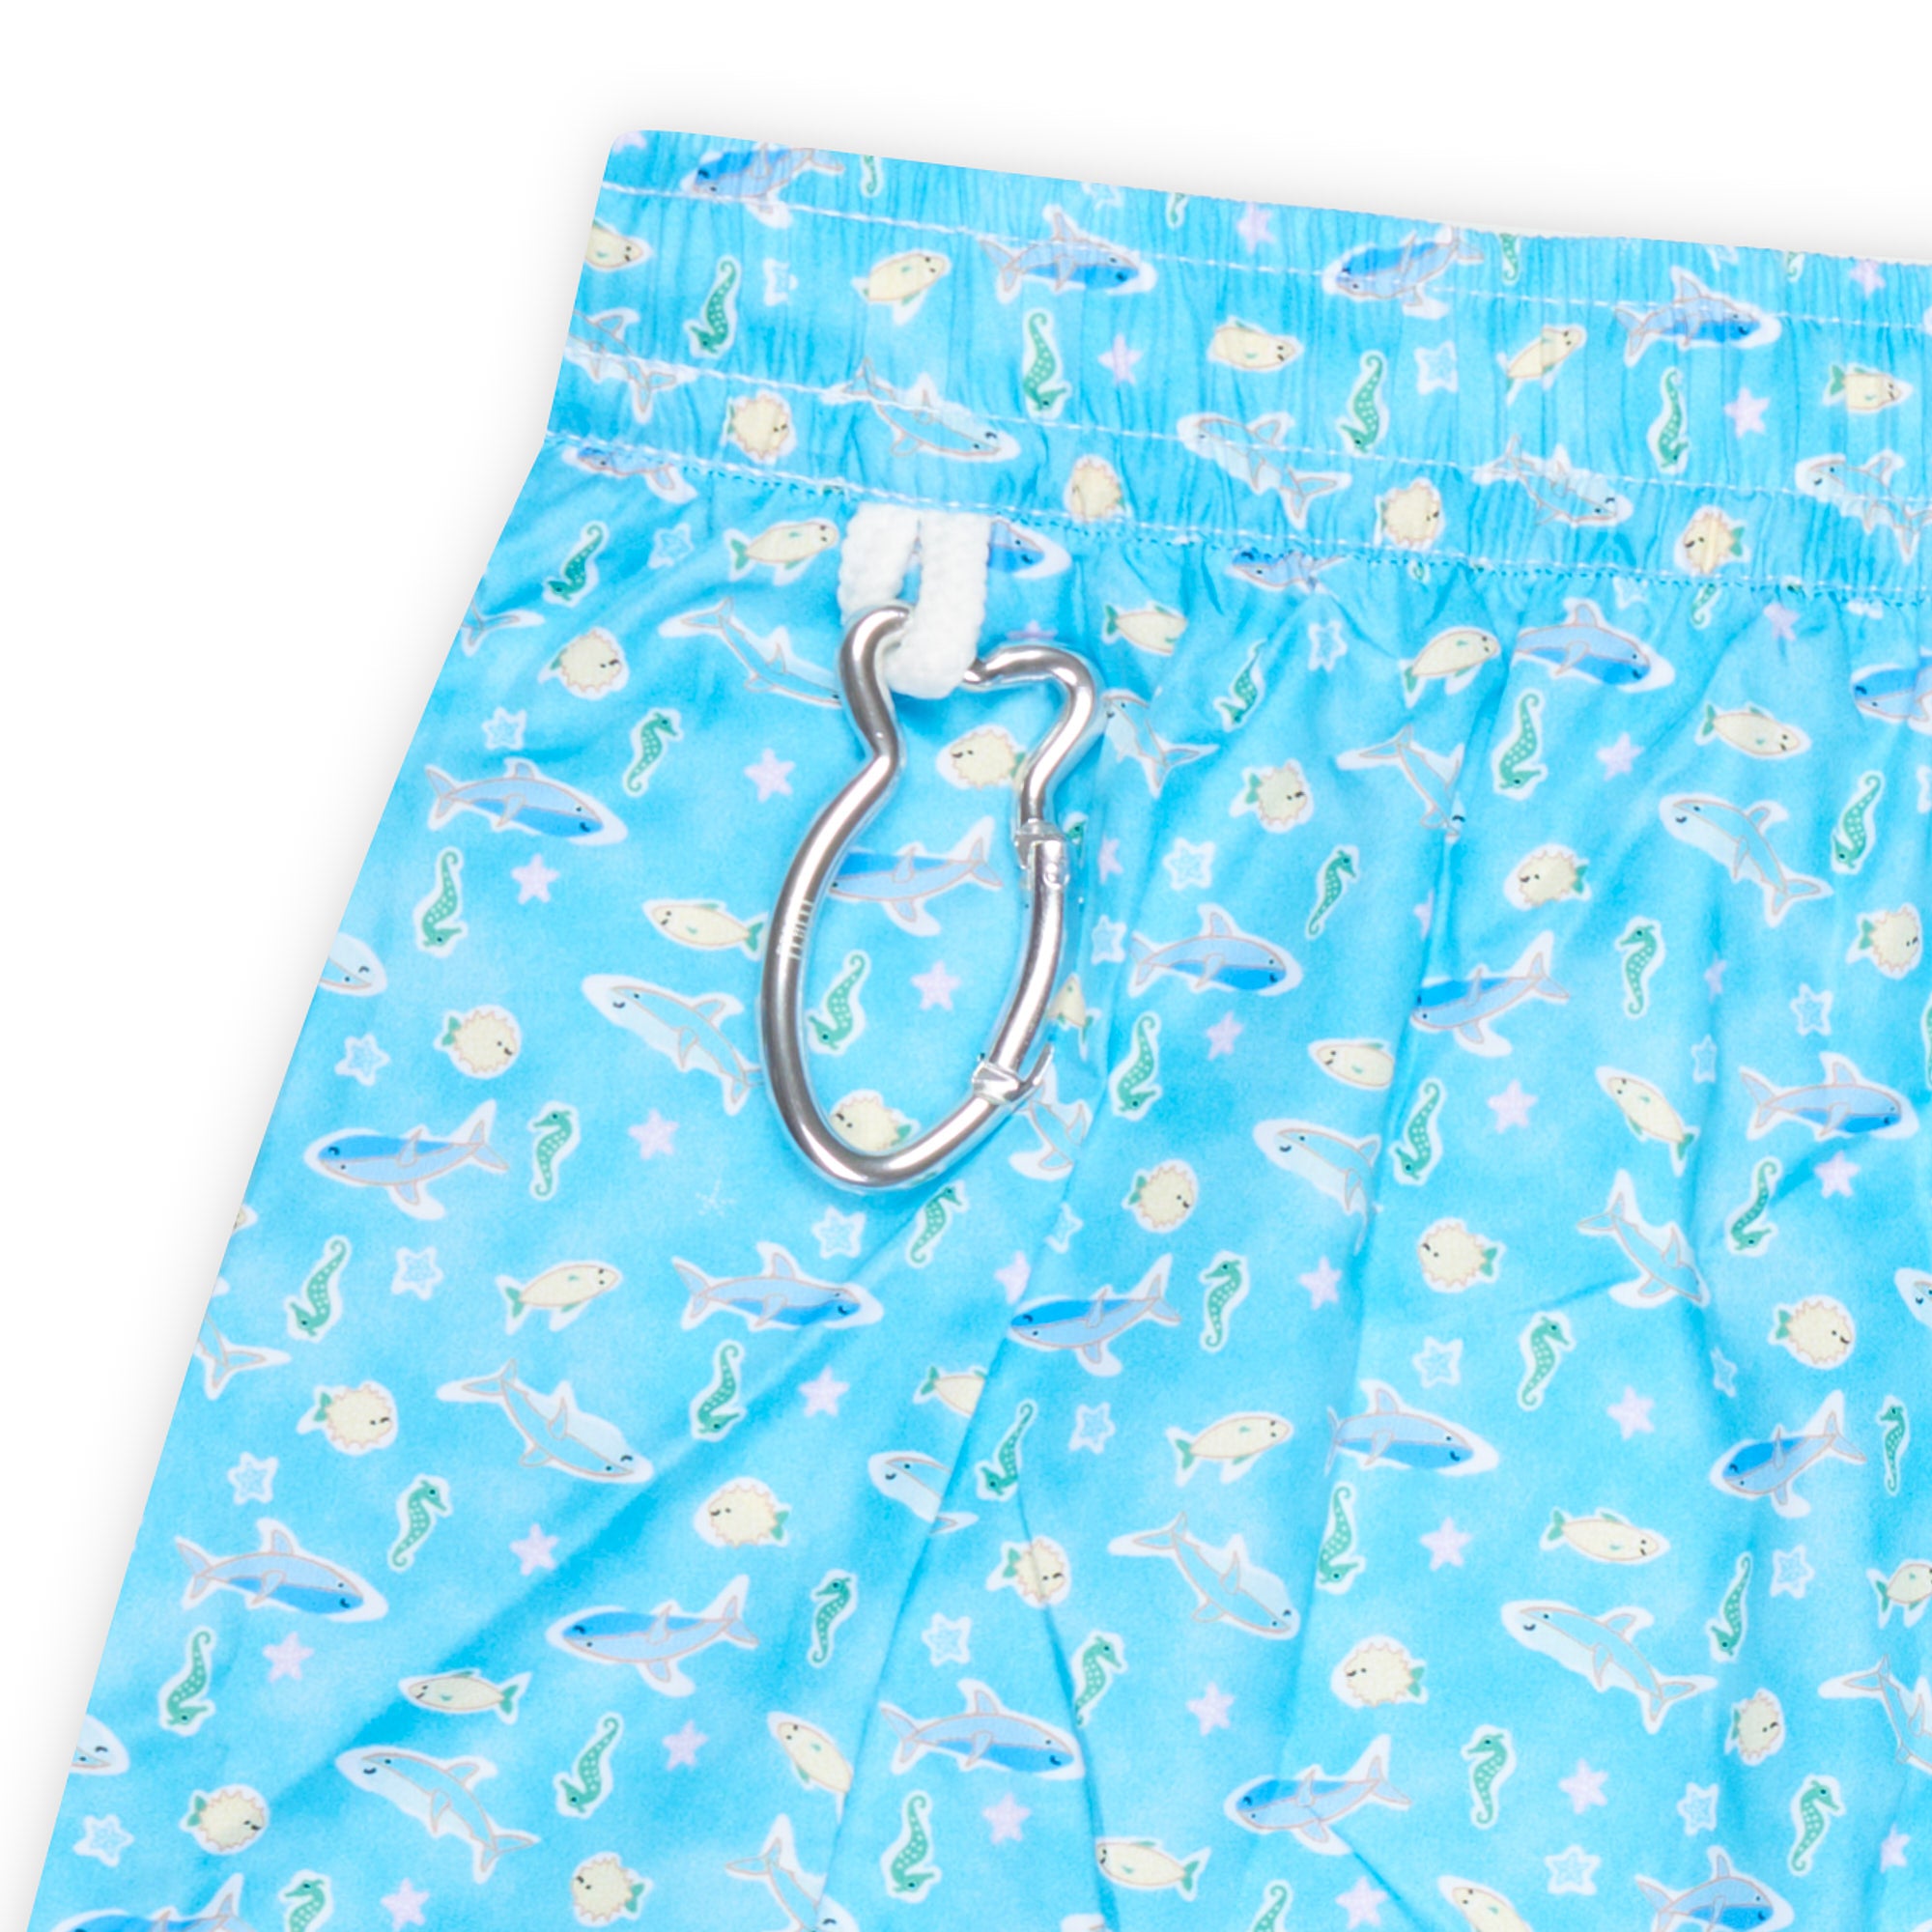 FEDELI Blue Sea Animal Printed Positano Airstop Swim Shorts Trunks NEW